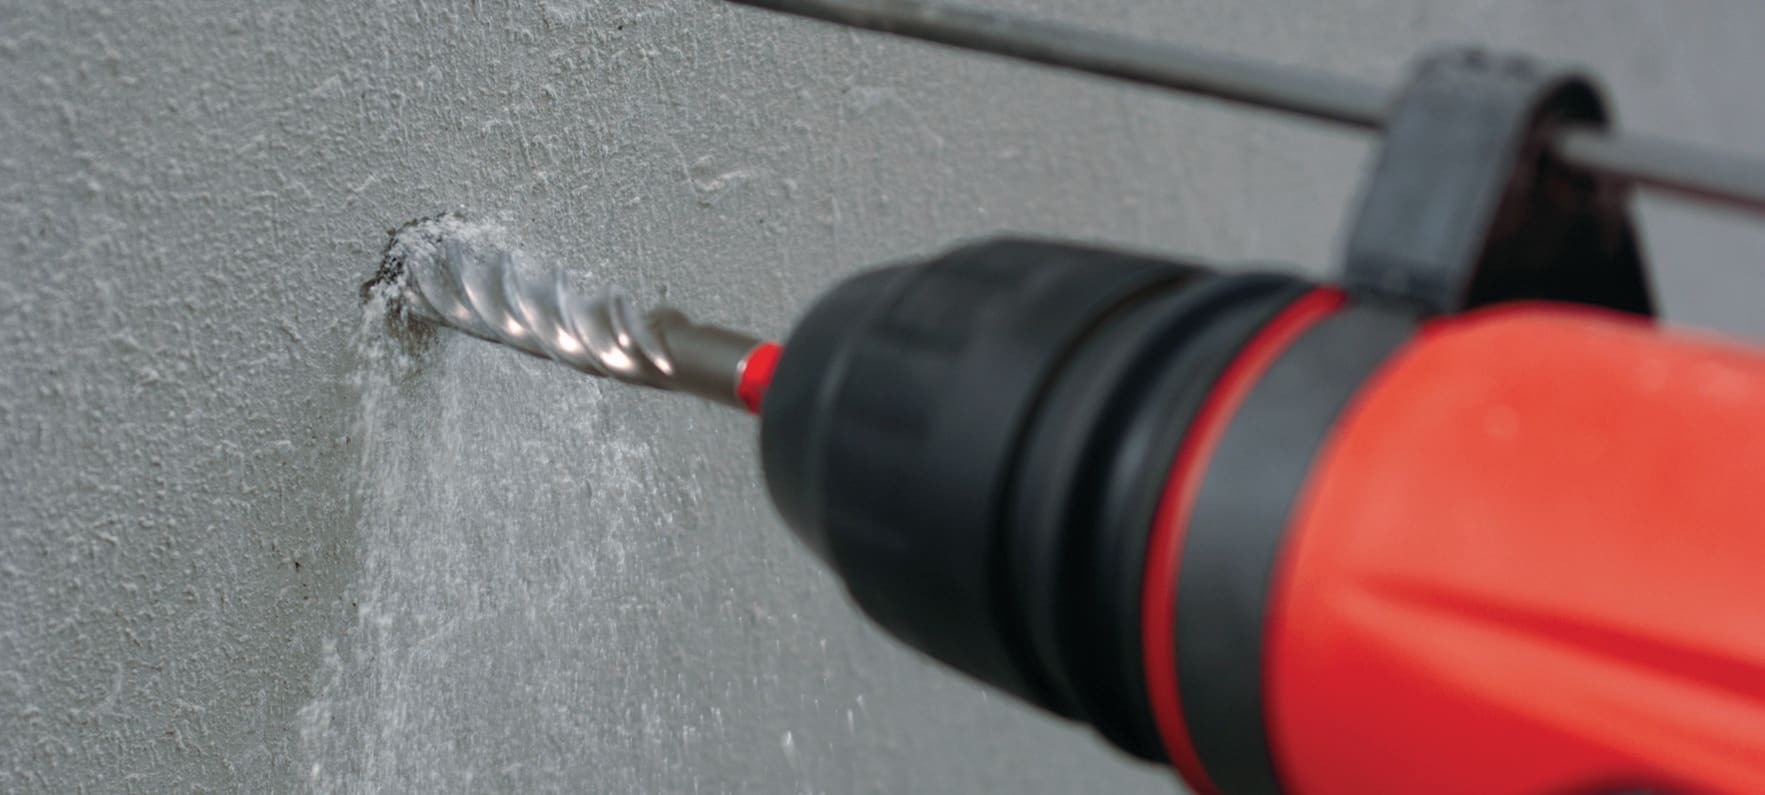 Hammer drill bit 6mm x 220mm TE-CX 6/22 working length 150mm masonry. Hilti Hilti sds 